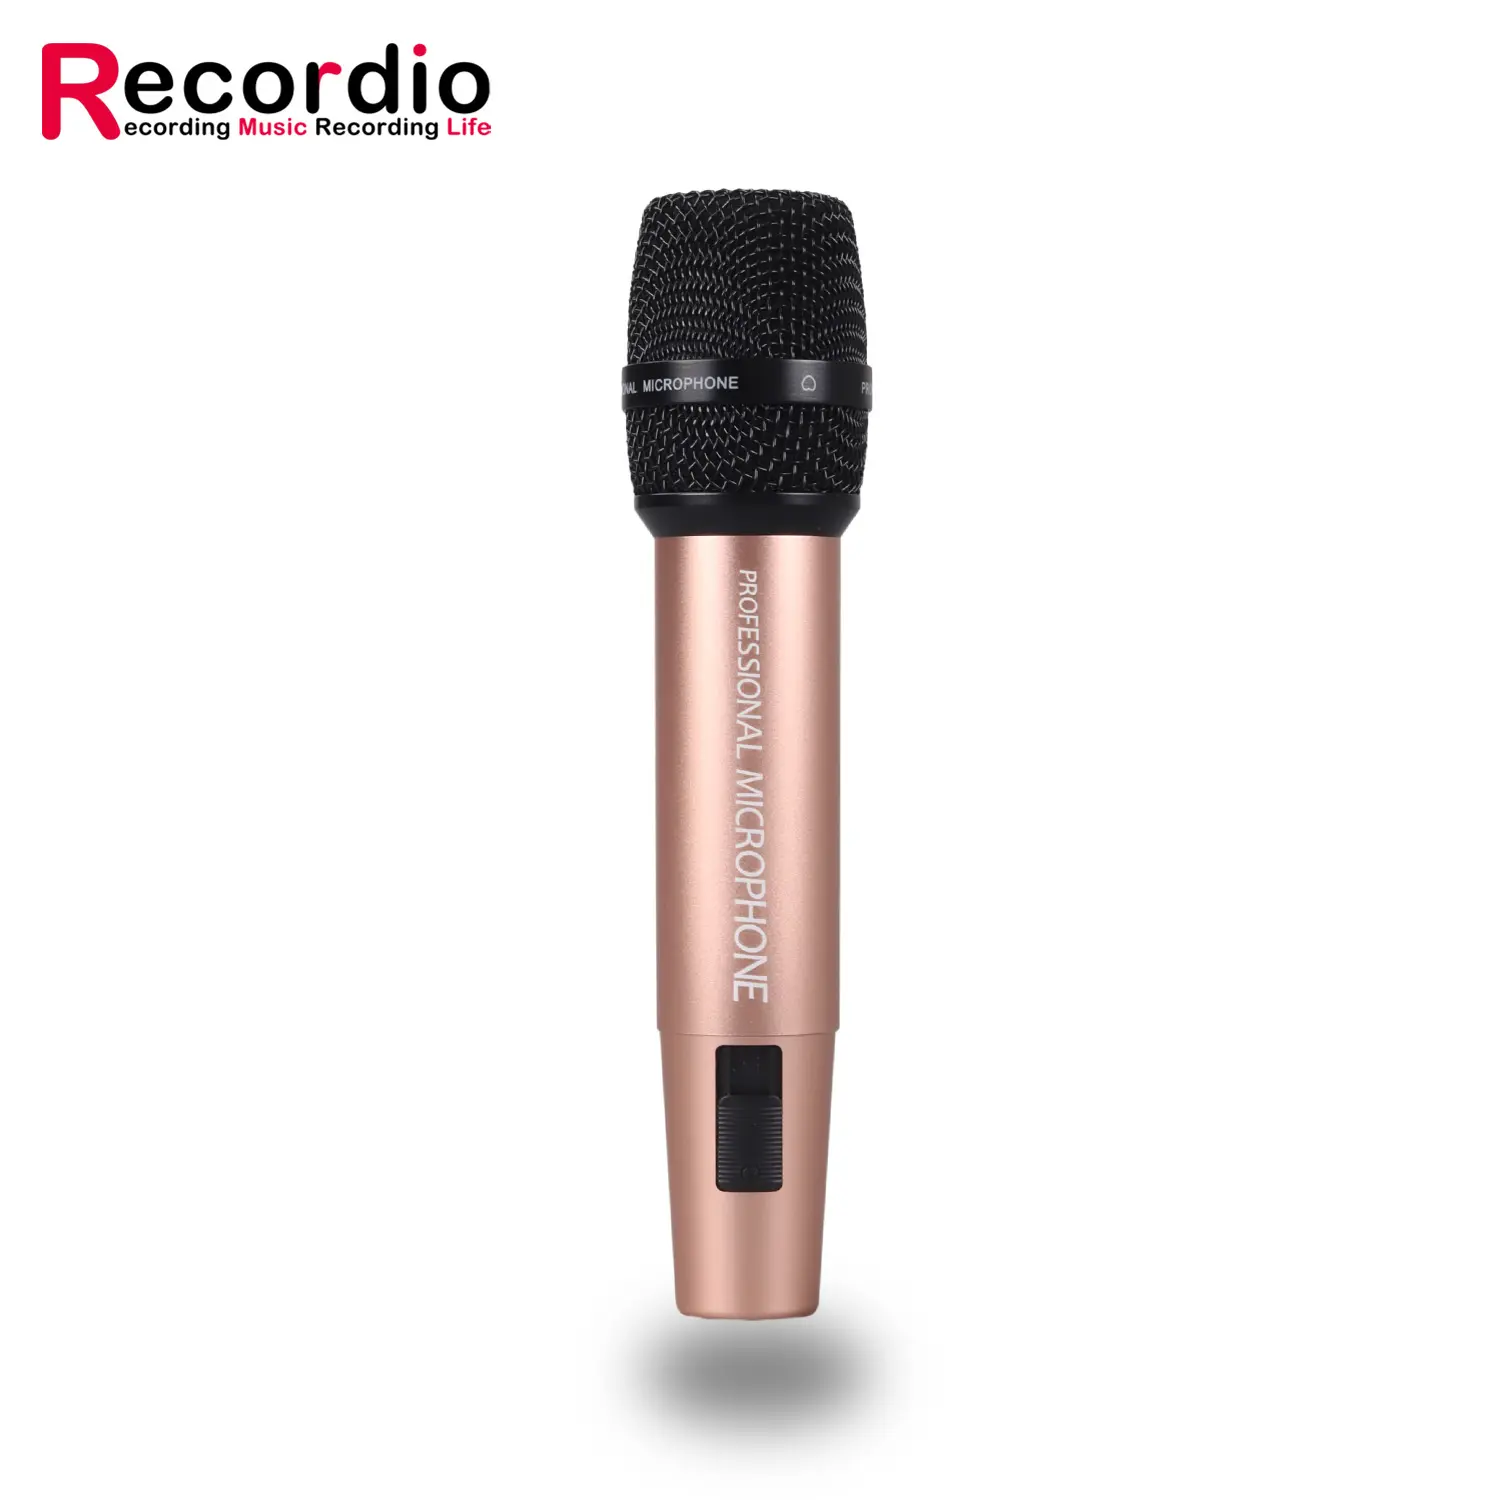 GAM-SC19, mikrofon dinamis, mikrofon genggam untuk vokal dengan pola Pick-up Cardioid, sakelar On/Off diskret